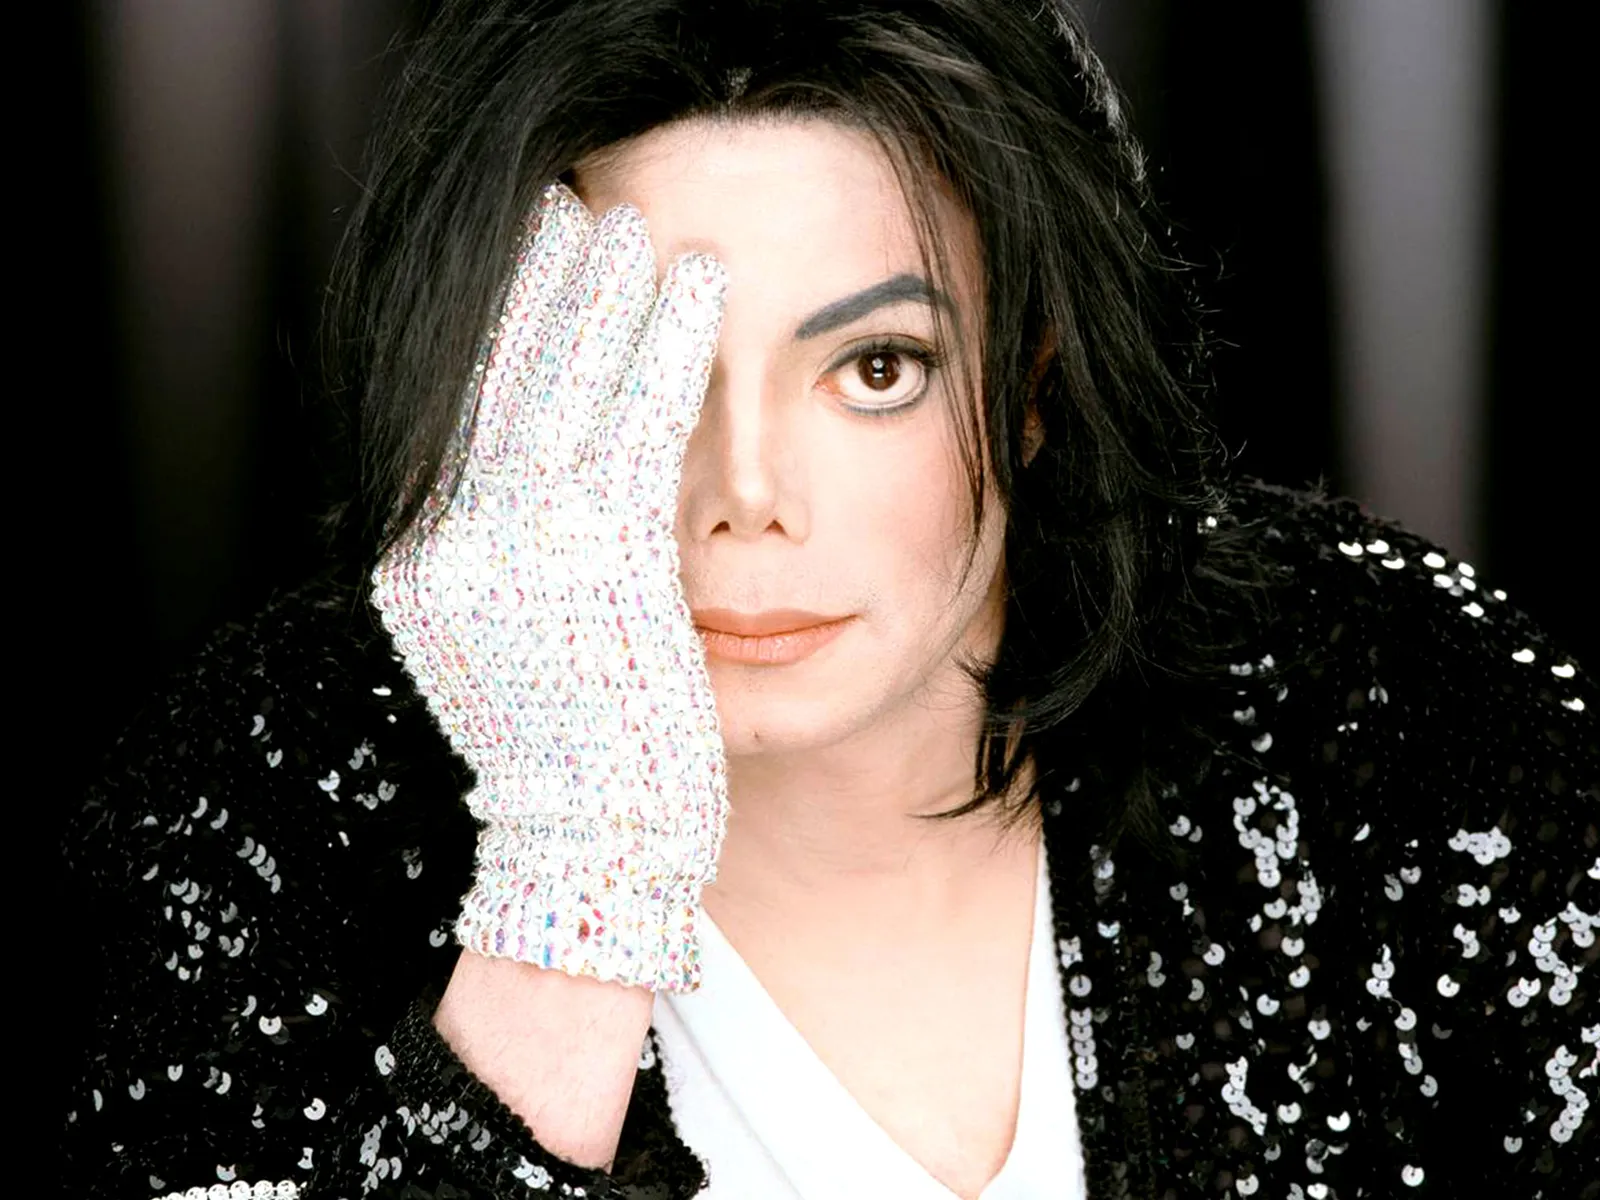 Membawa Pengaruh Besar, Inilah 7 Alasan Kenapa Dunia Sangat Merindukan Sosok Michael Jackson